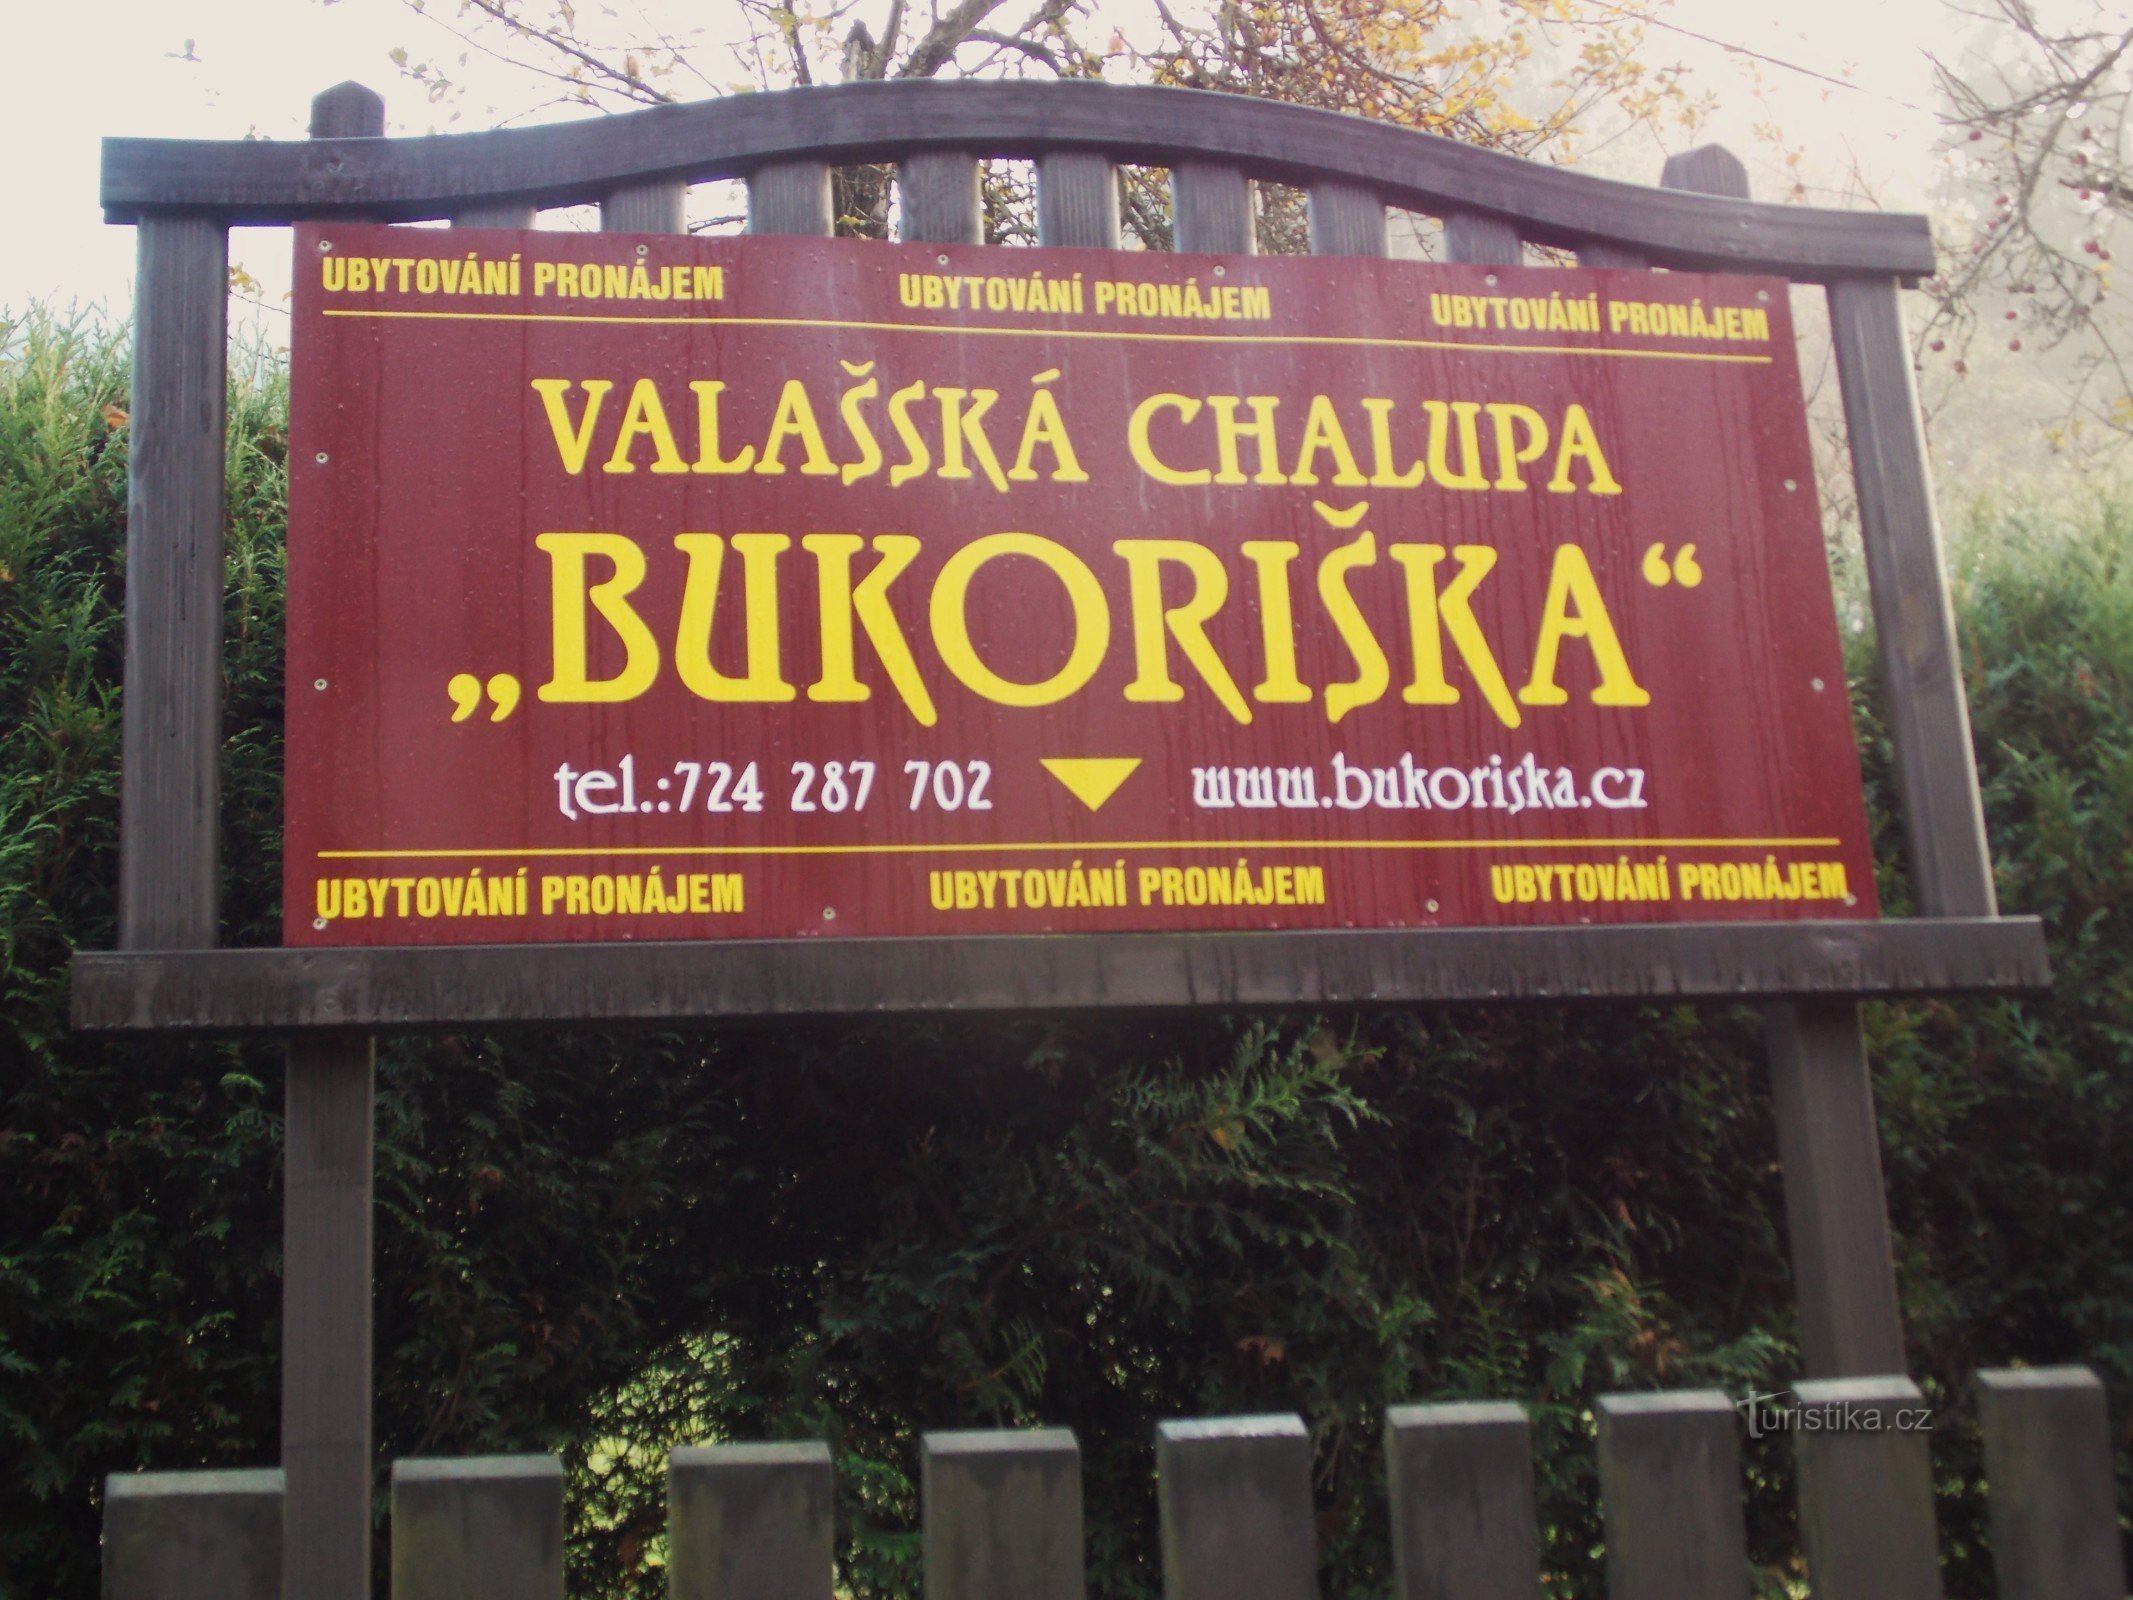 Chalet valaque - Bukoriška - hébergement à Velké Karlovice